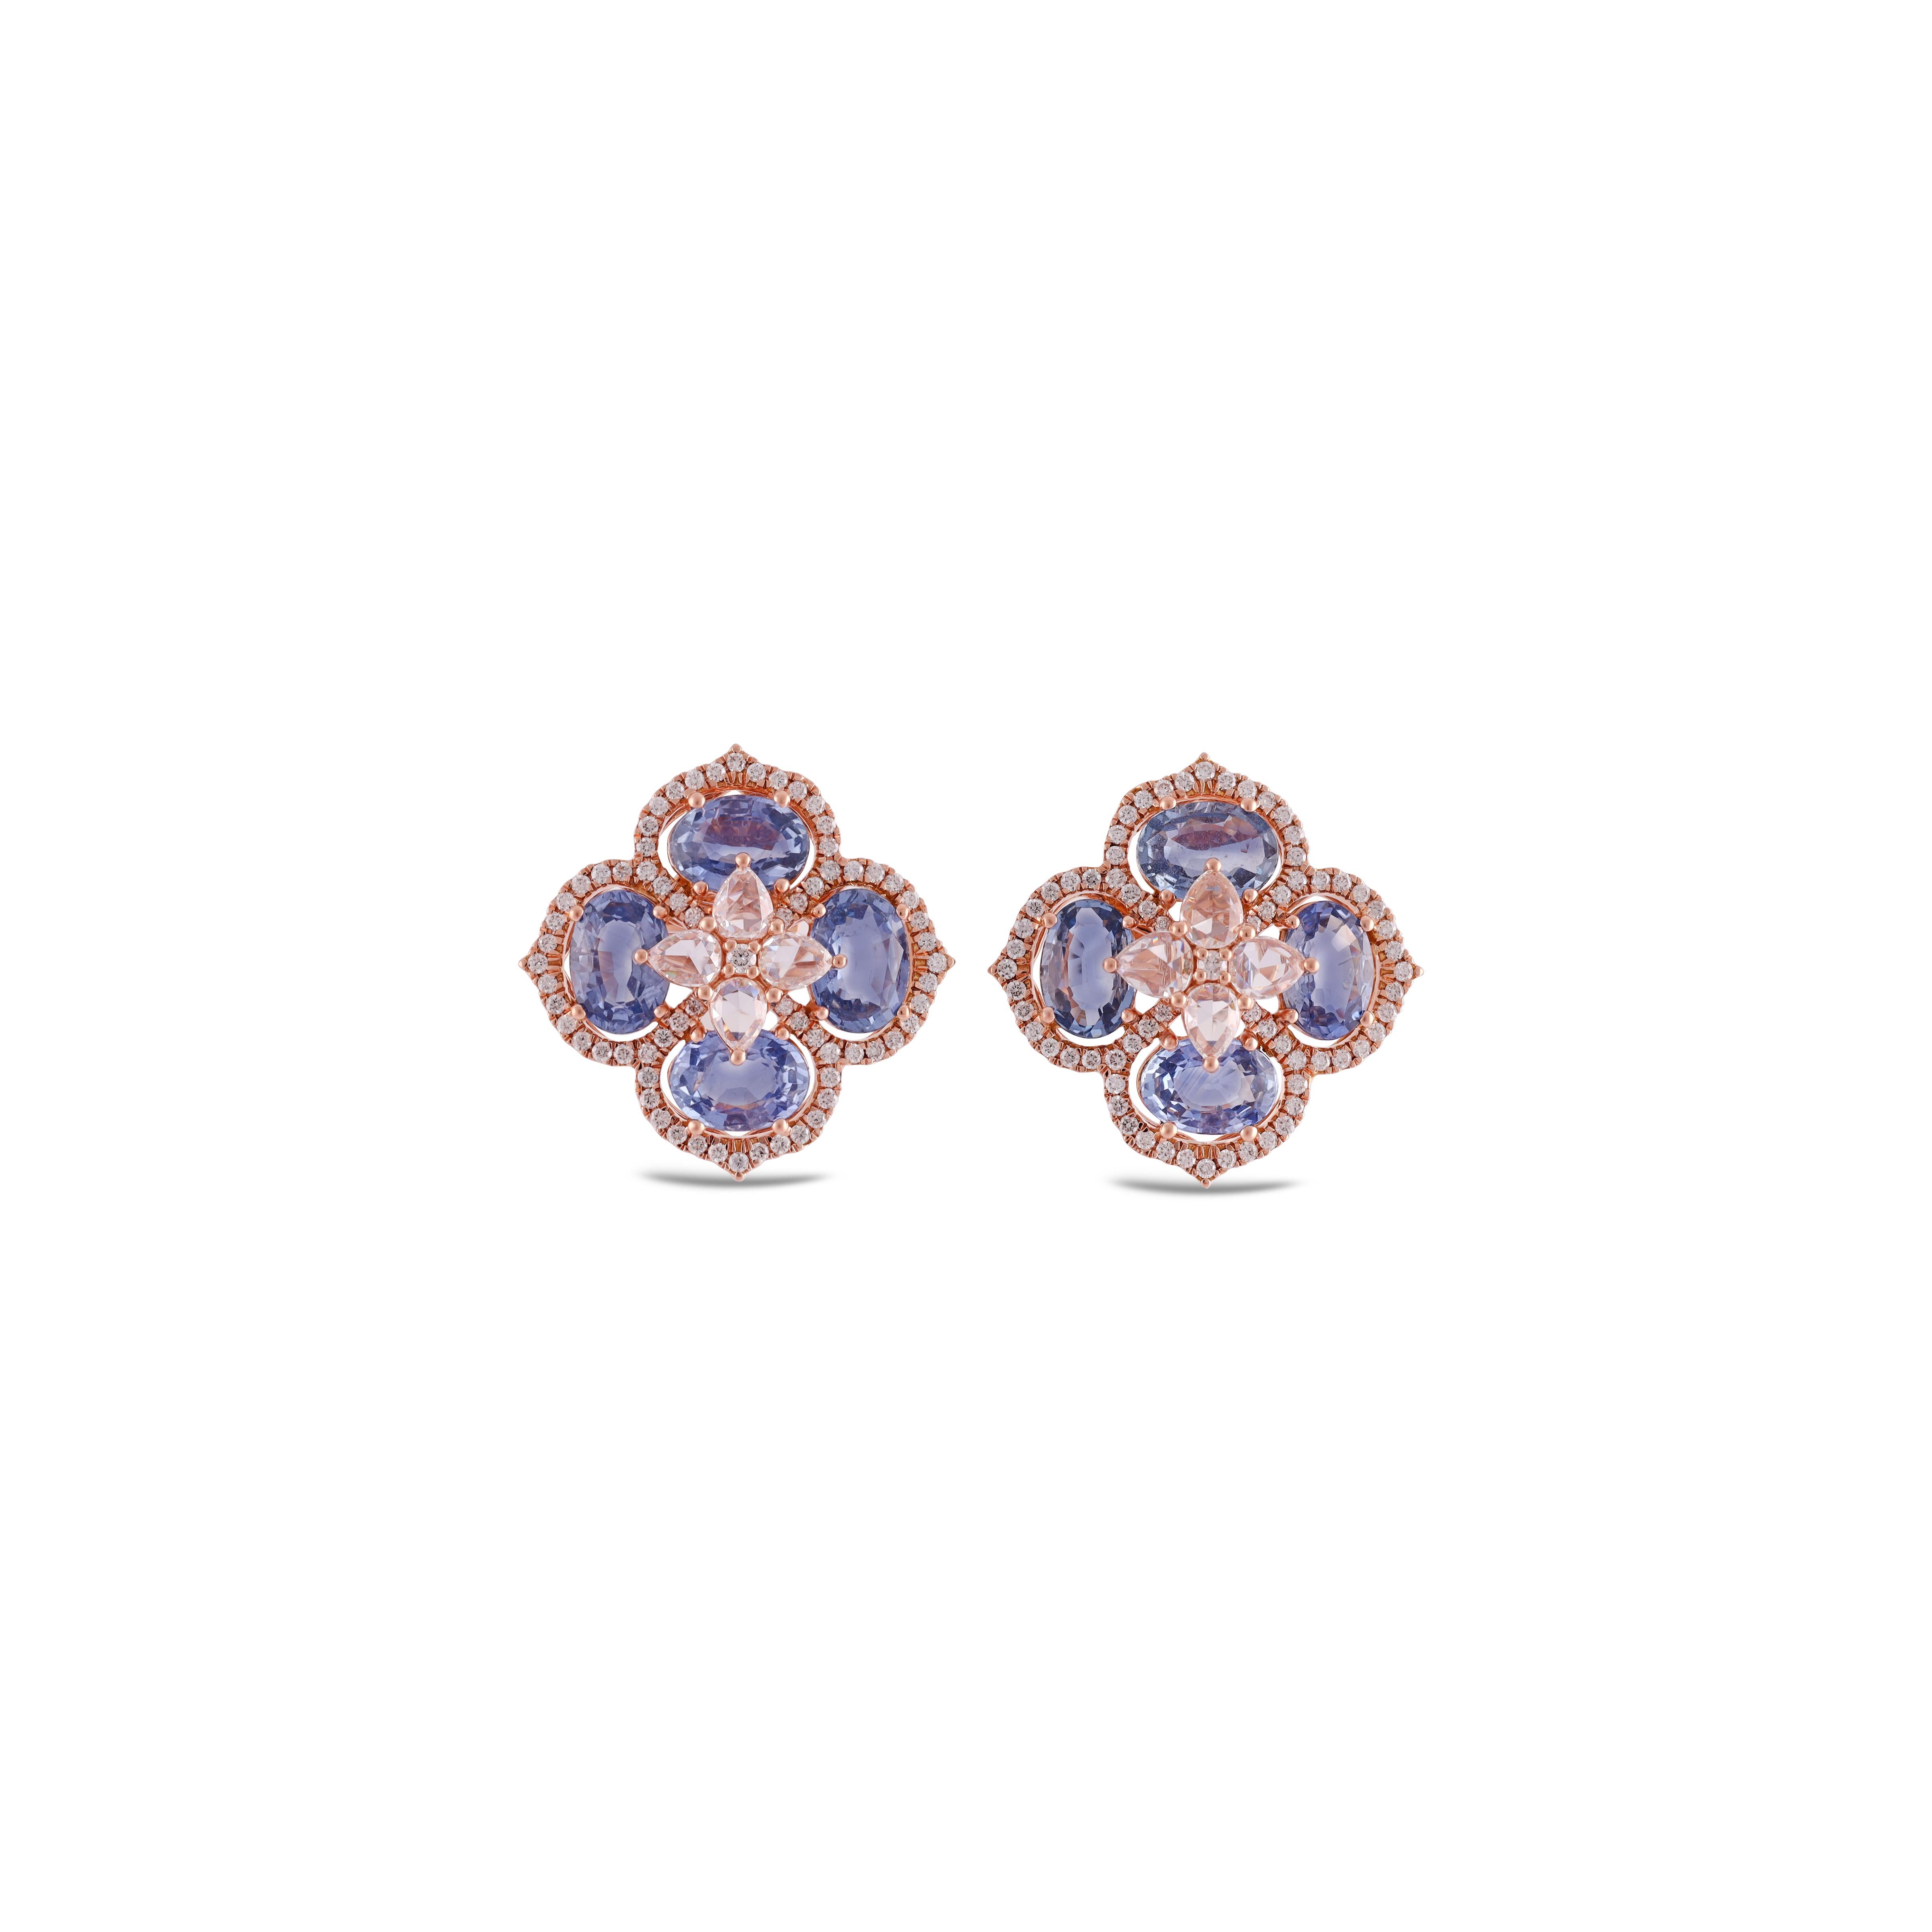 Mixed Cut 6.66 Carat Blue Sapphire & Diamond Flower Earrings Studs in 18k Rose Gold . For Sale